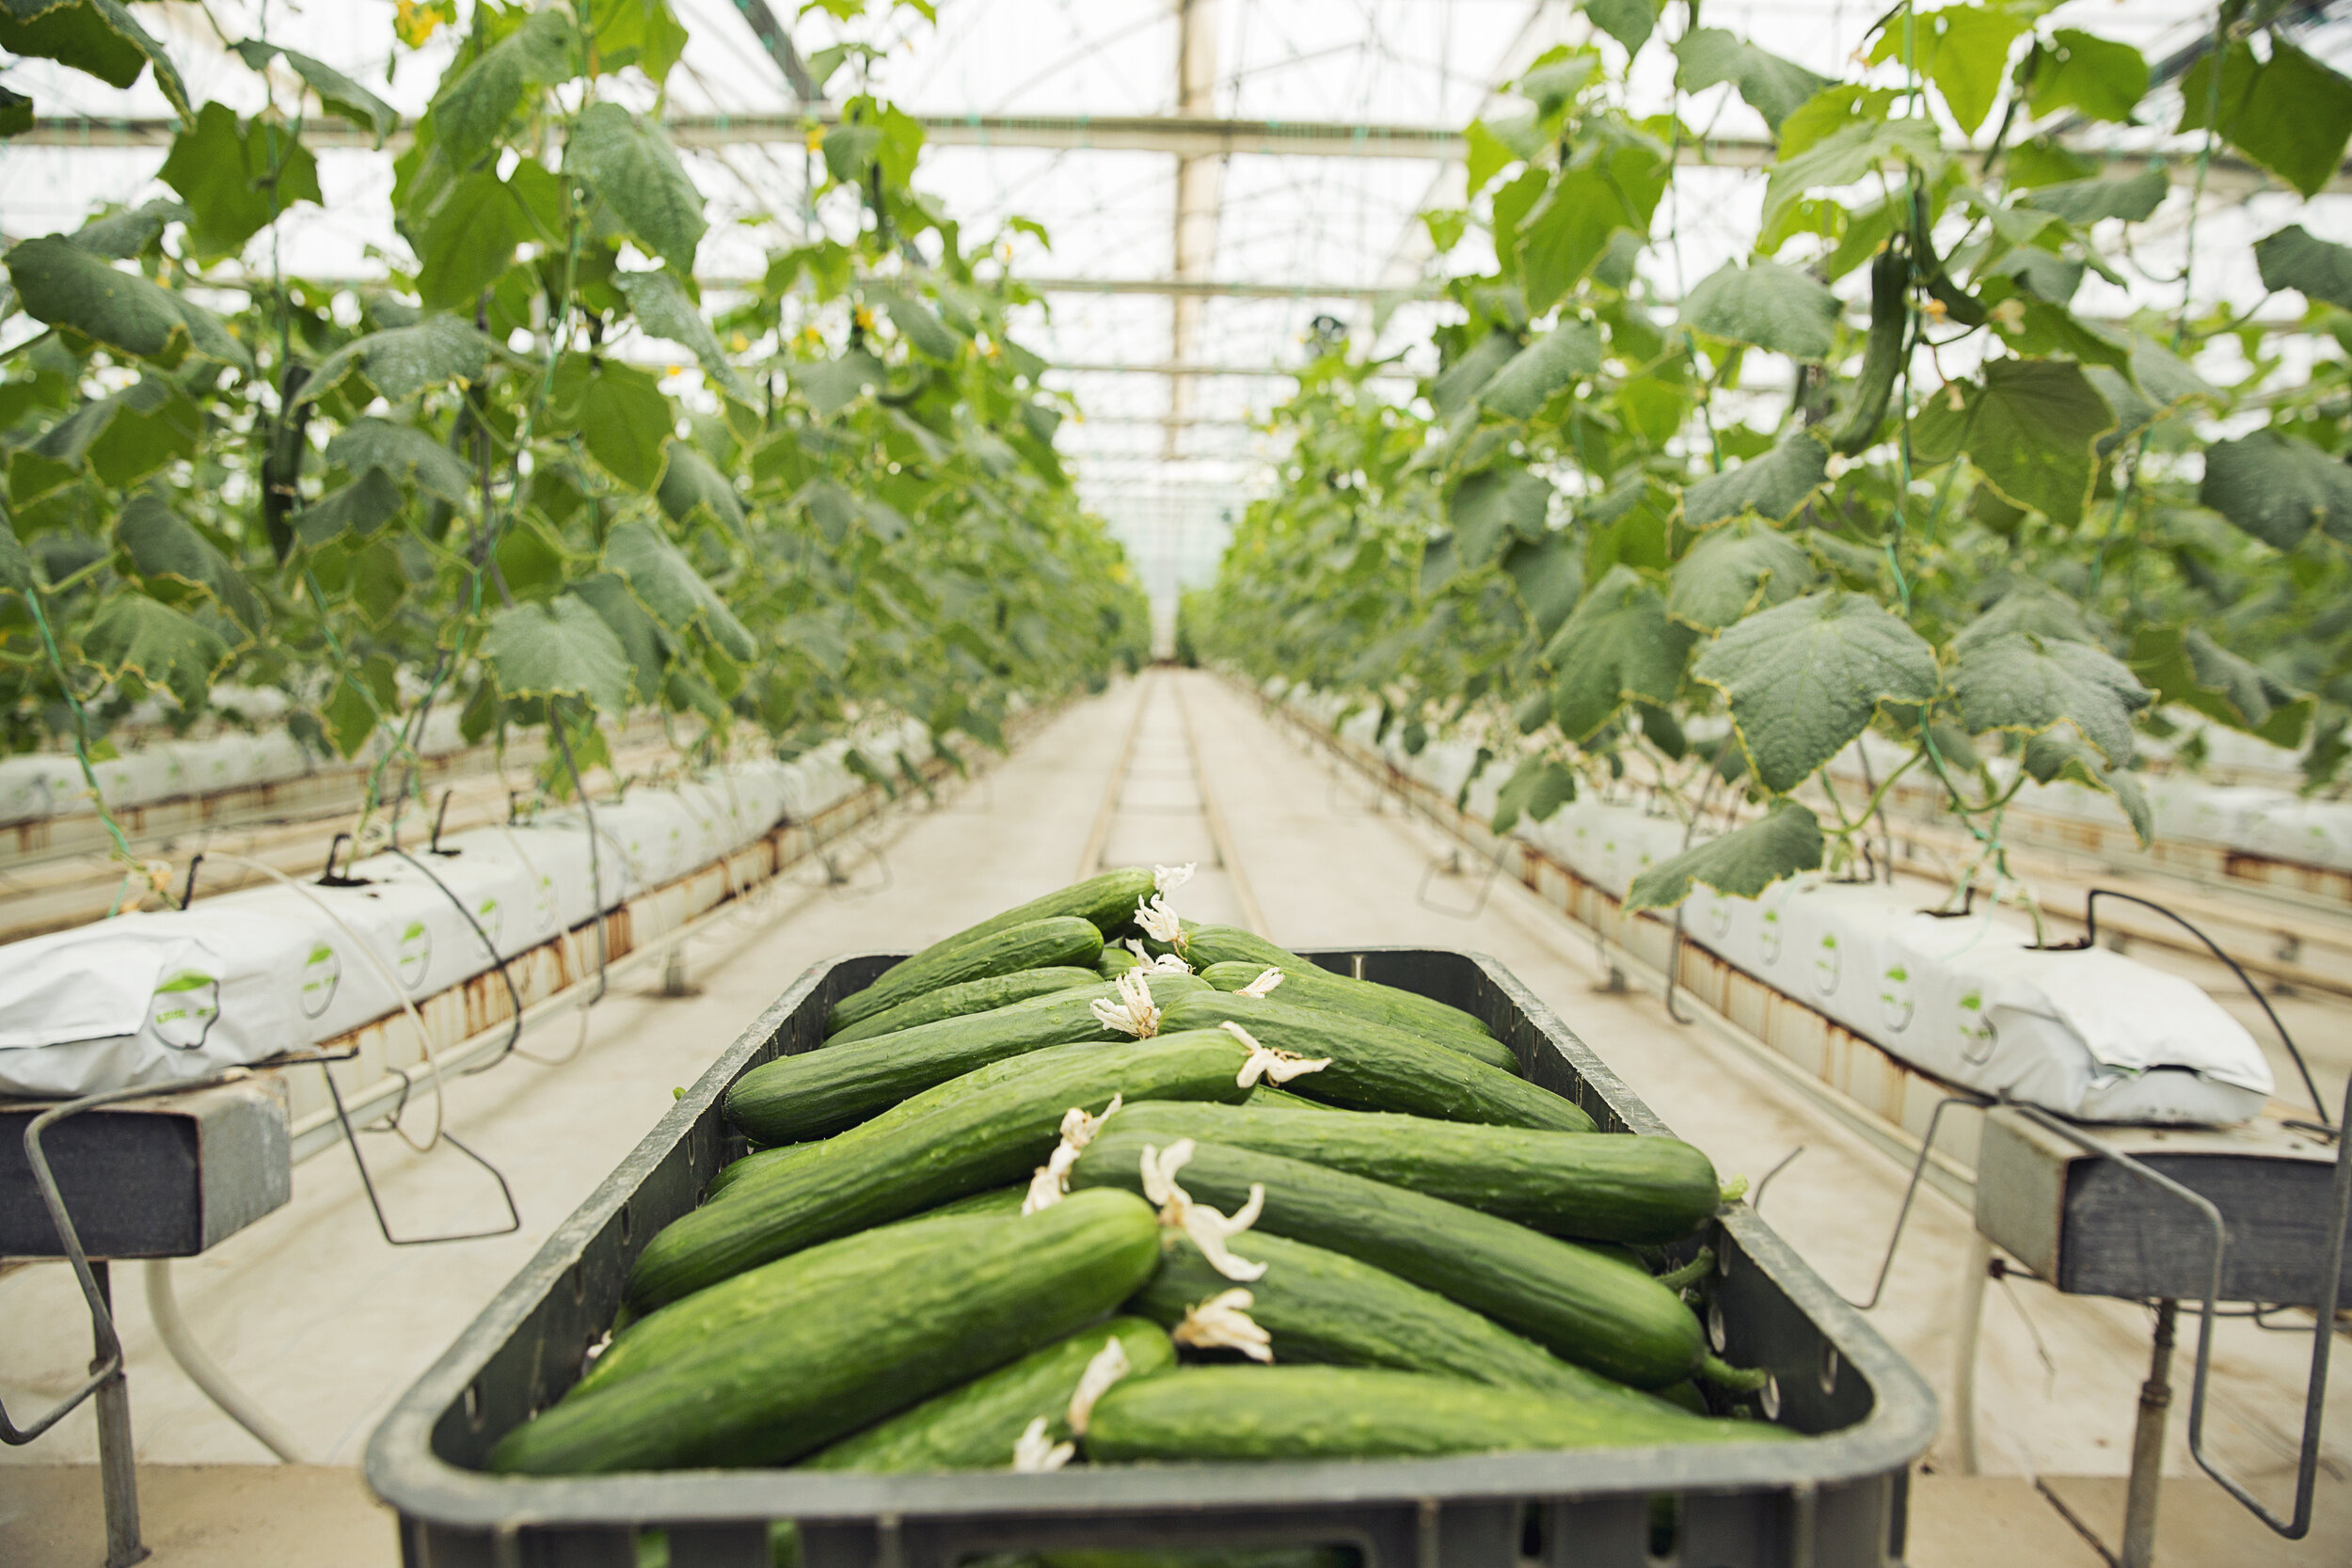 fresh-cucumber-gathered-into-plastic-box-from-greenhouse-plants.jpg